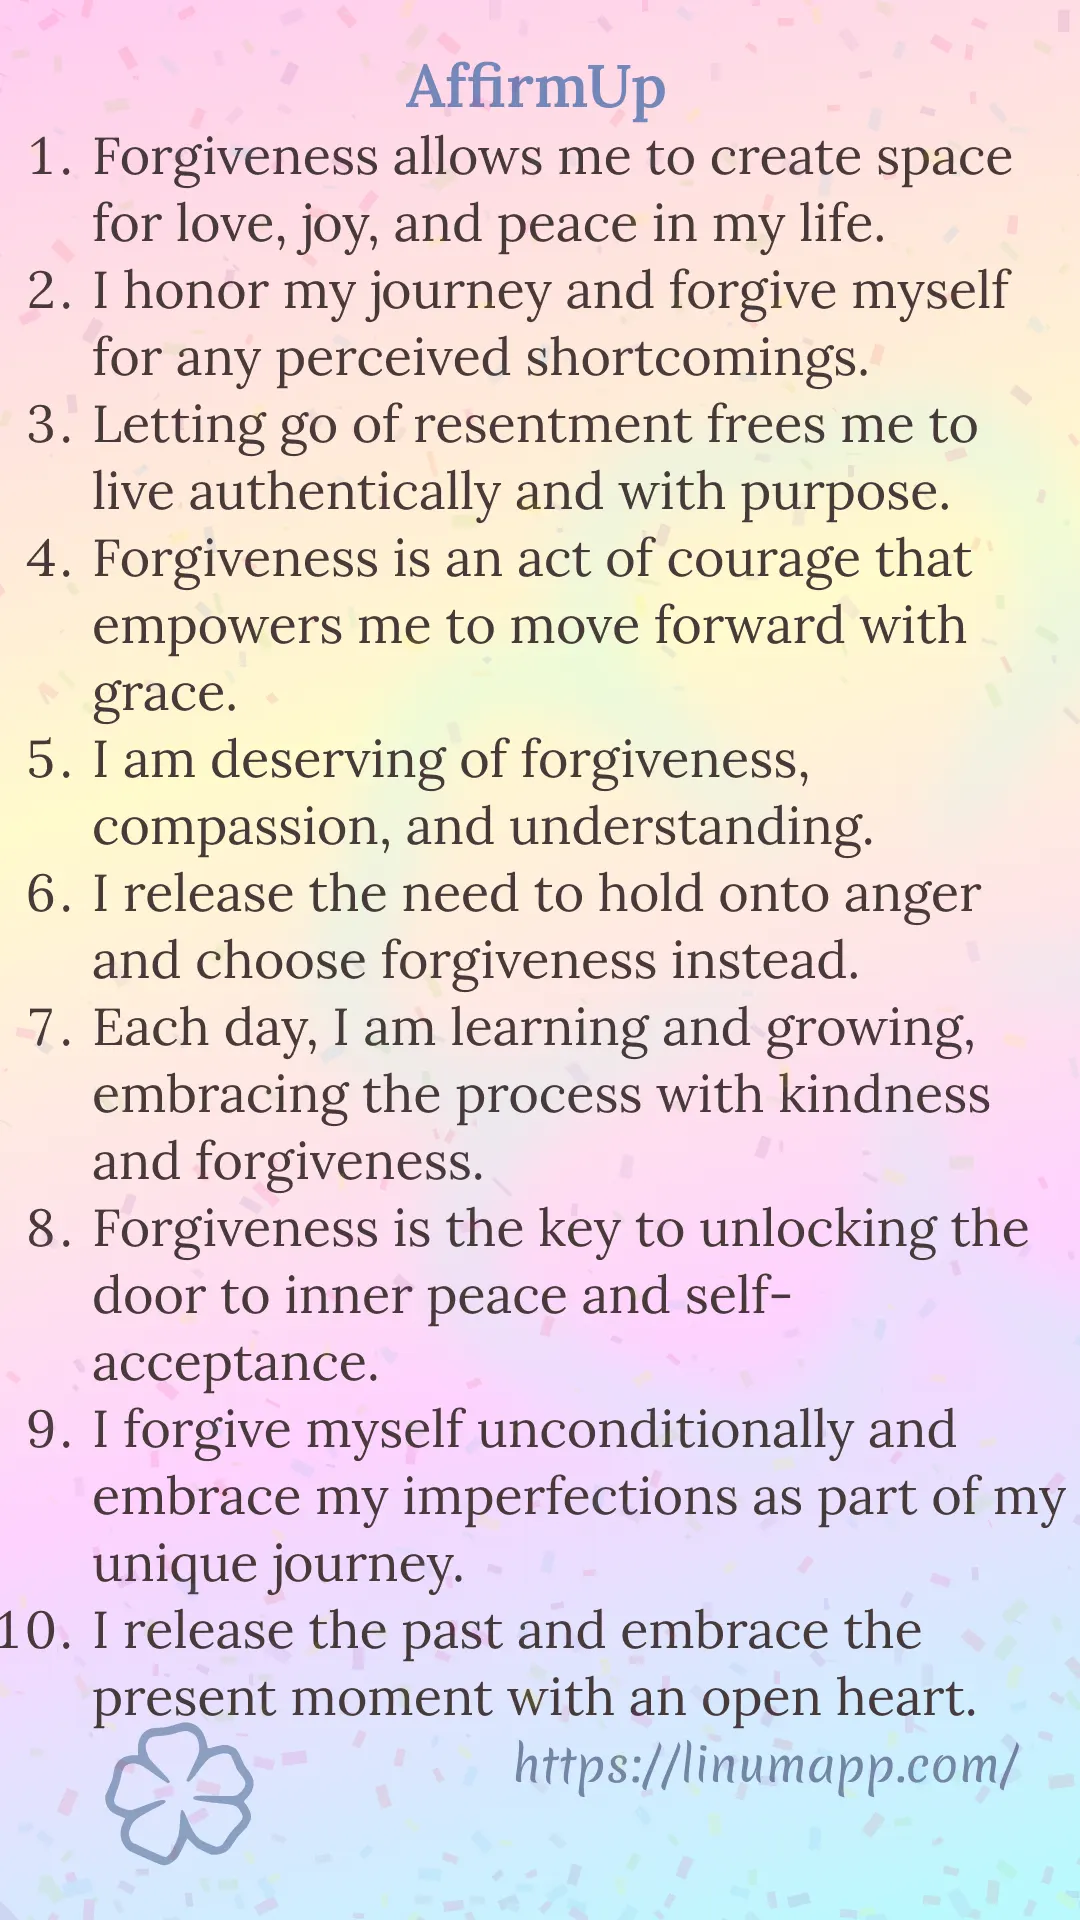 AffirmUp Forgiveness Affirmations for Self-Acceptance